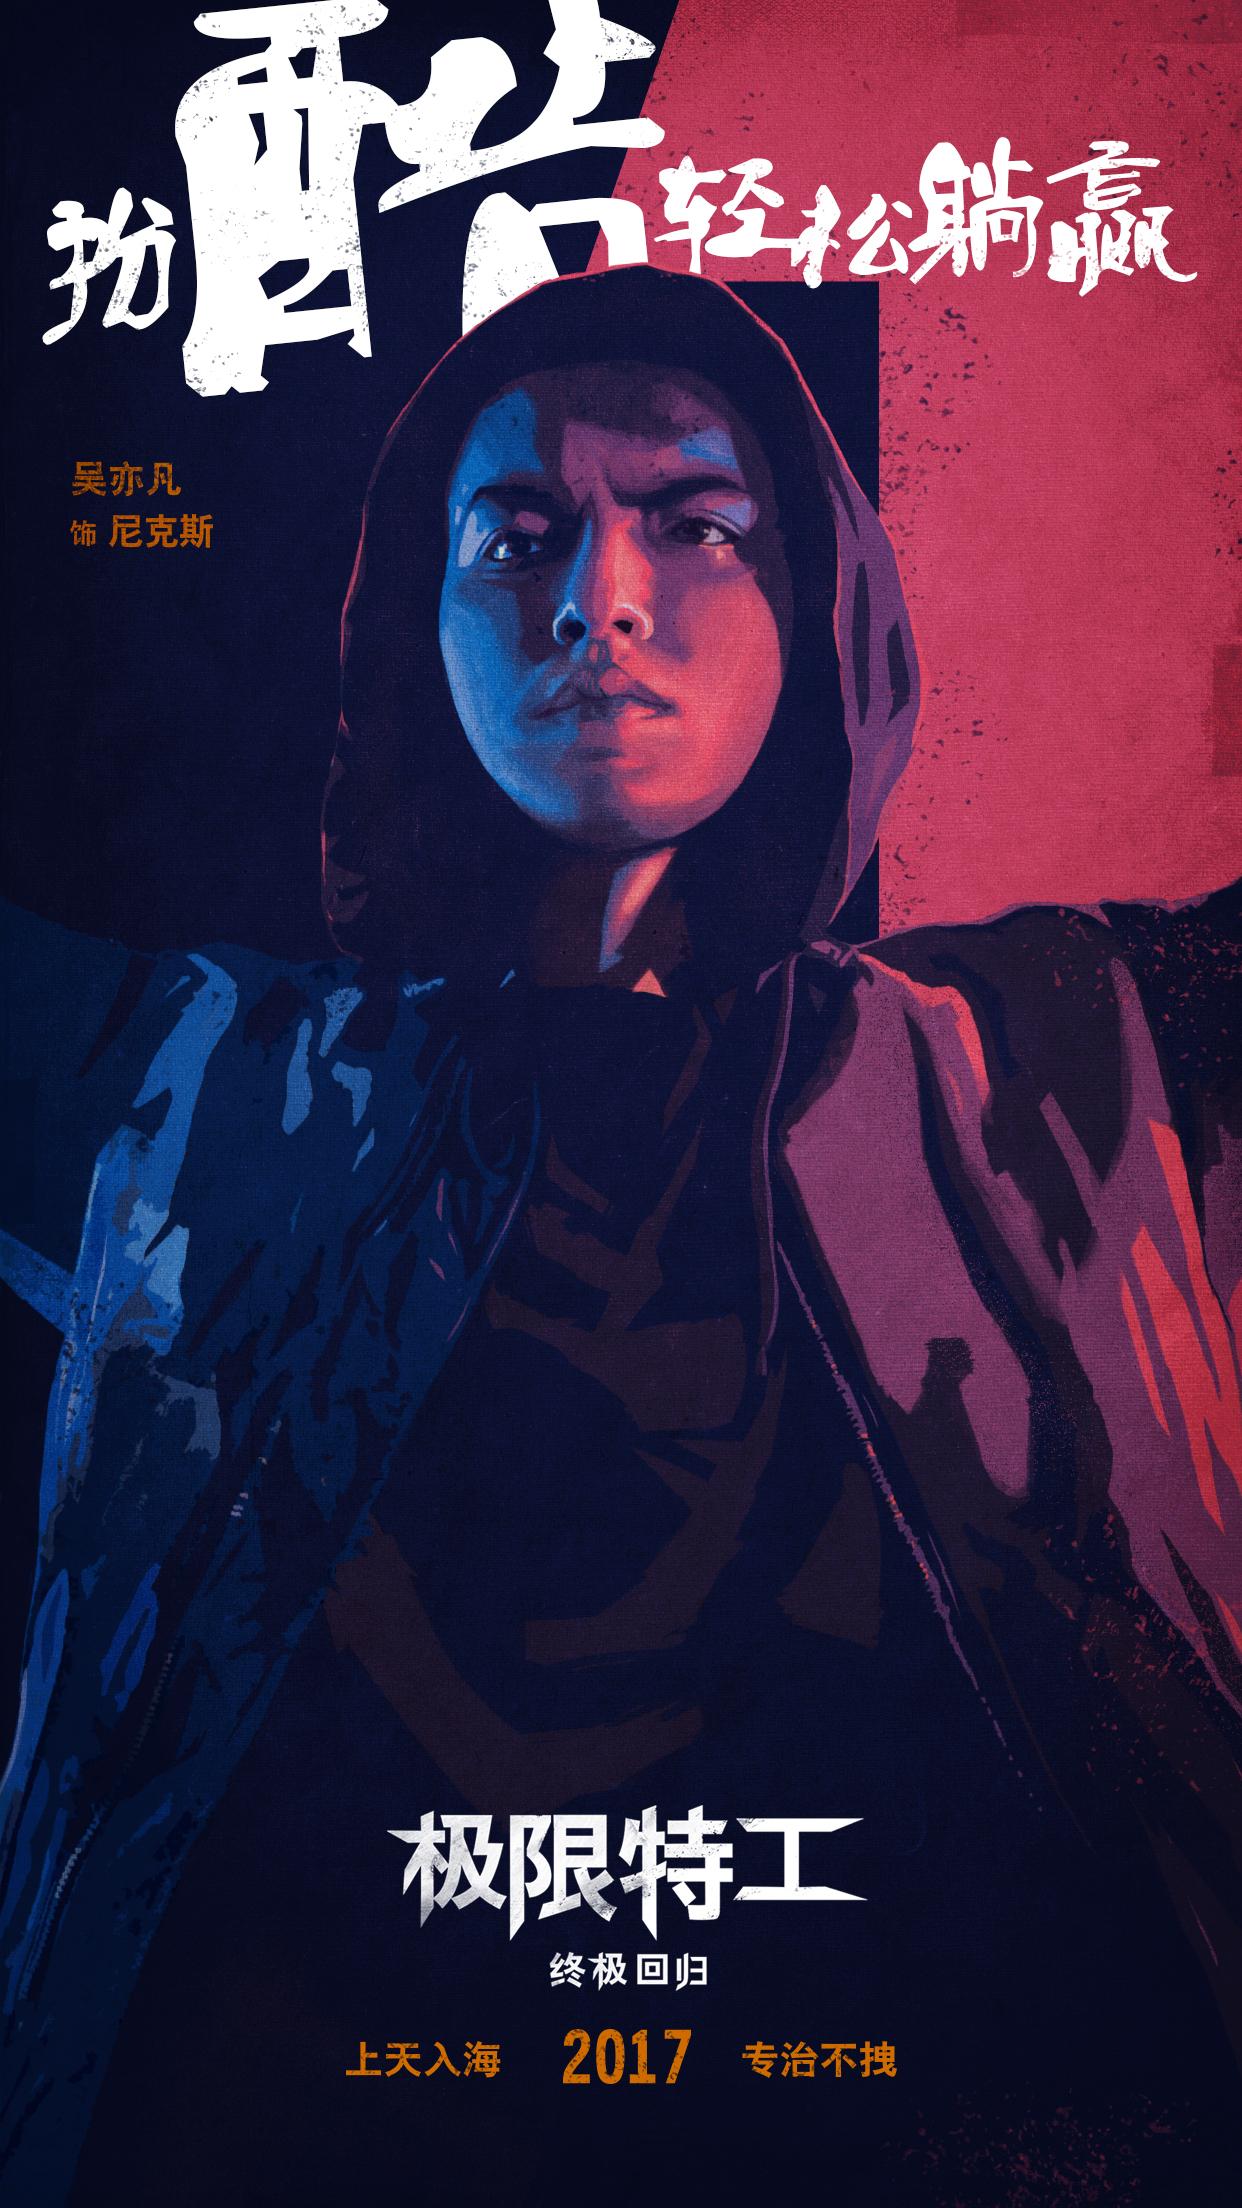 Постер фильма Три икса: Мировое господство | xXx: Return of Xander Cage